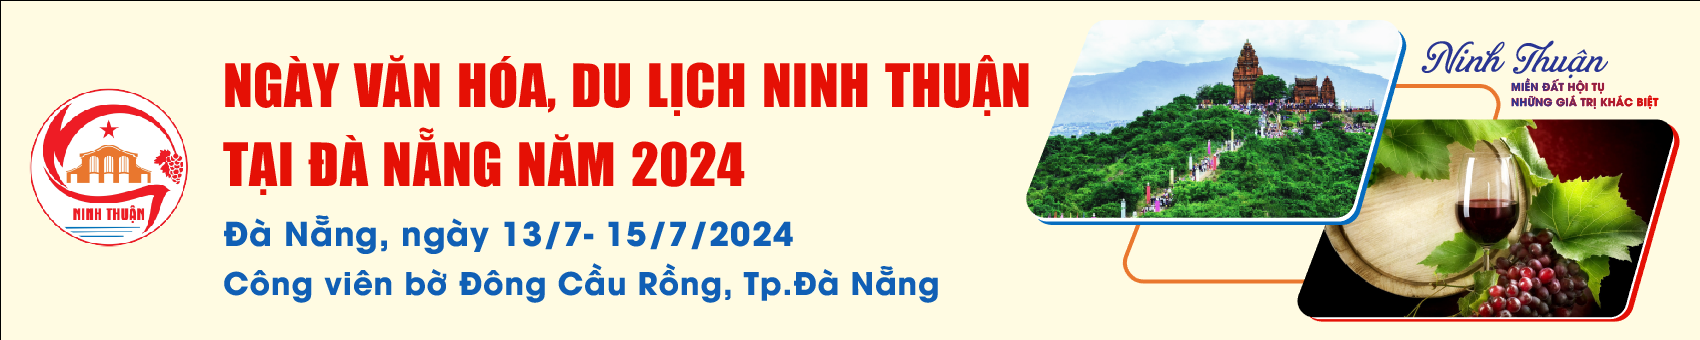 https://ninhthuan.gov.vn/portal/Pages/thongtindiaphuong.aspx